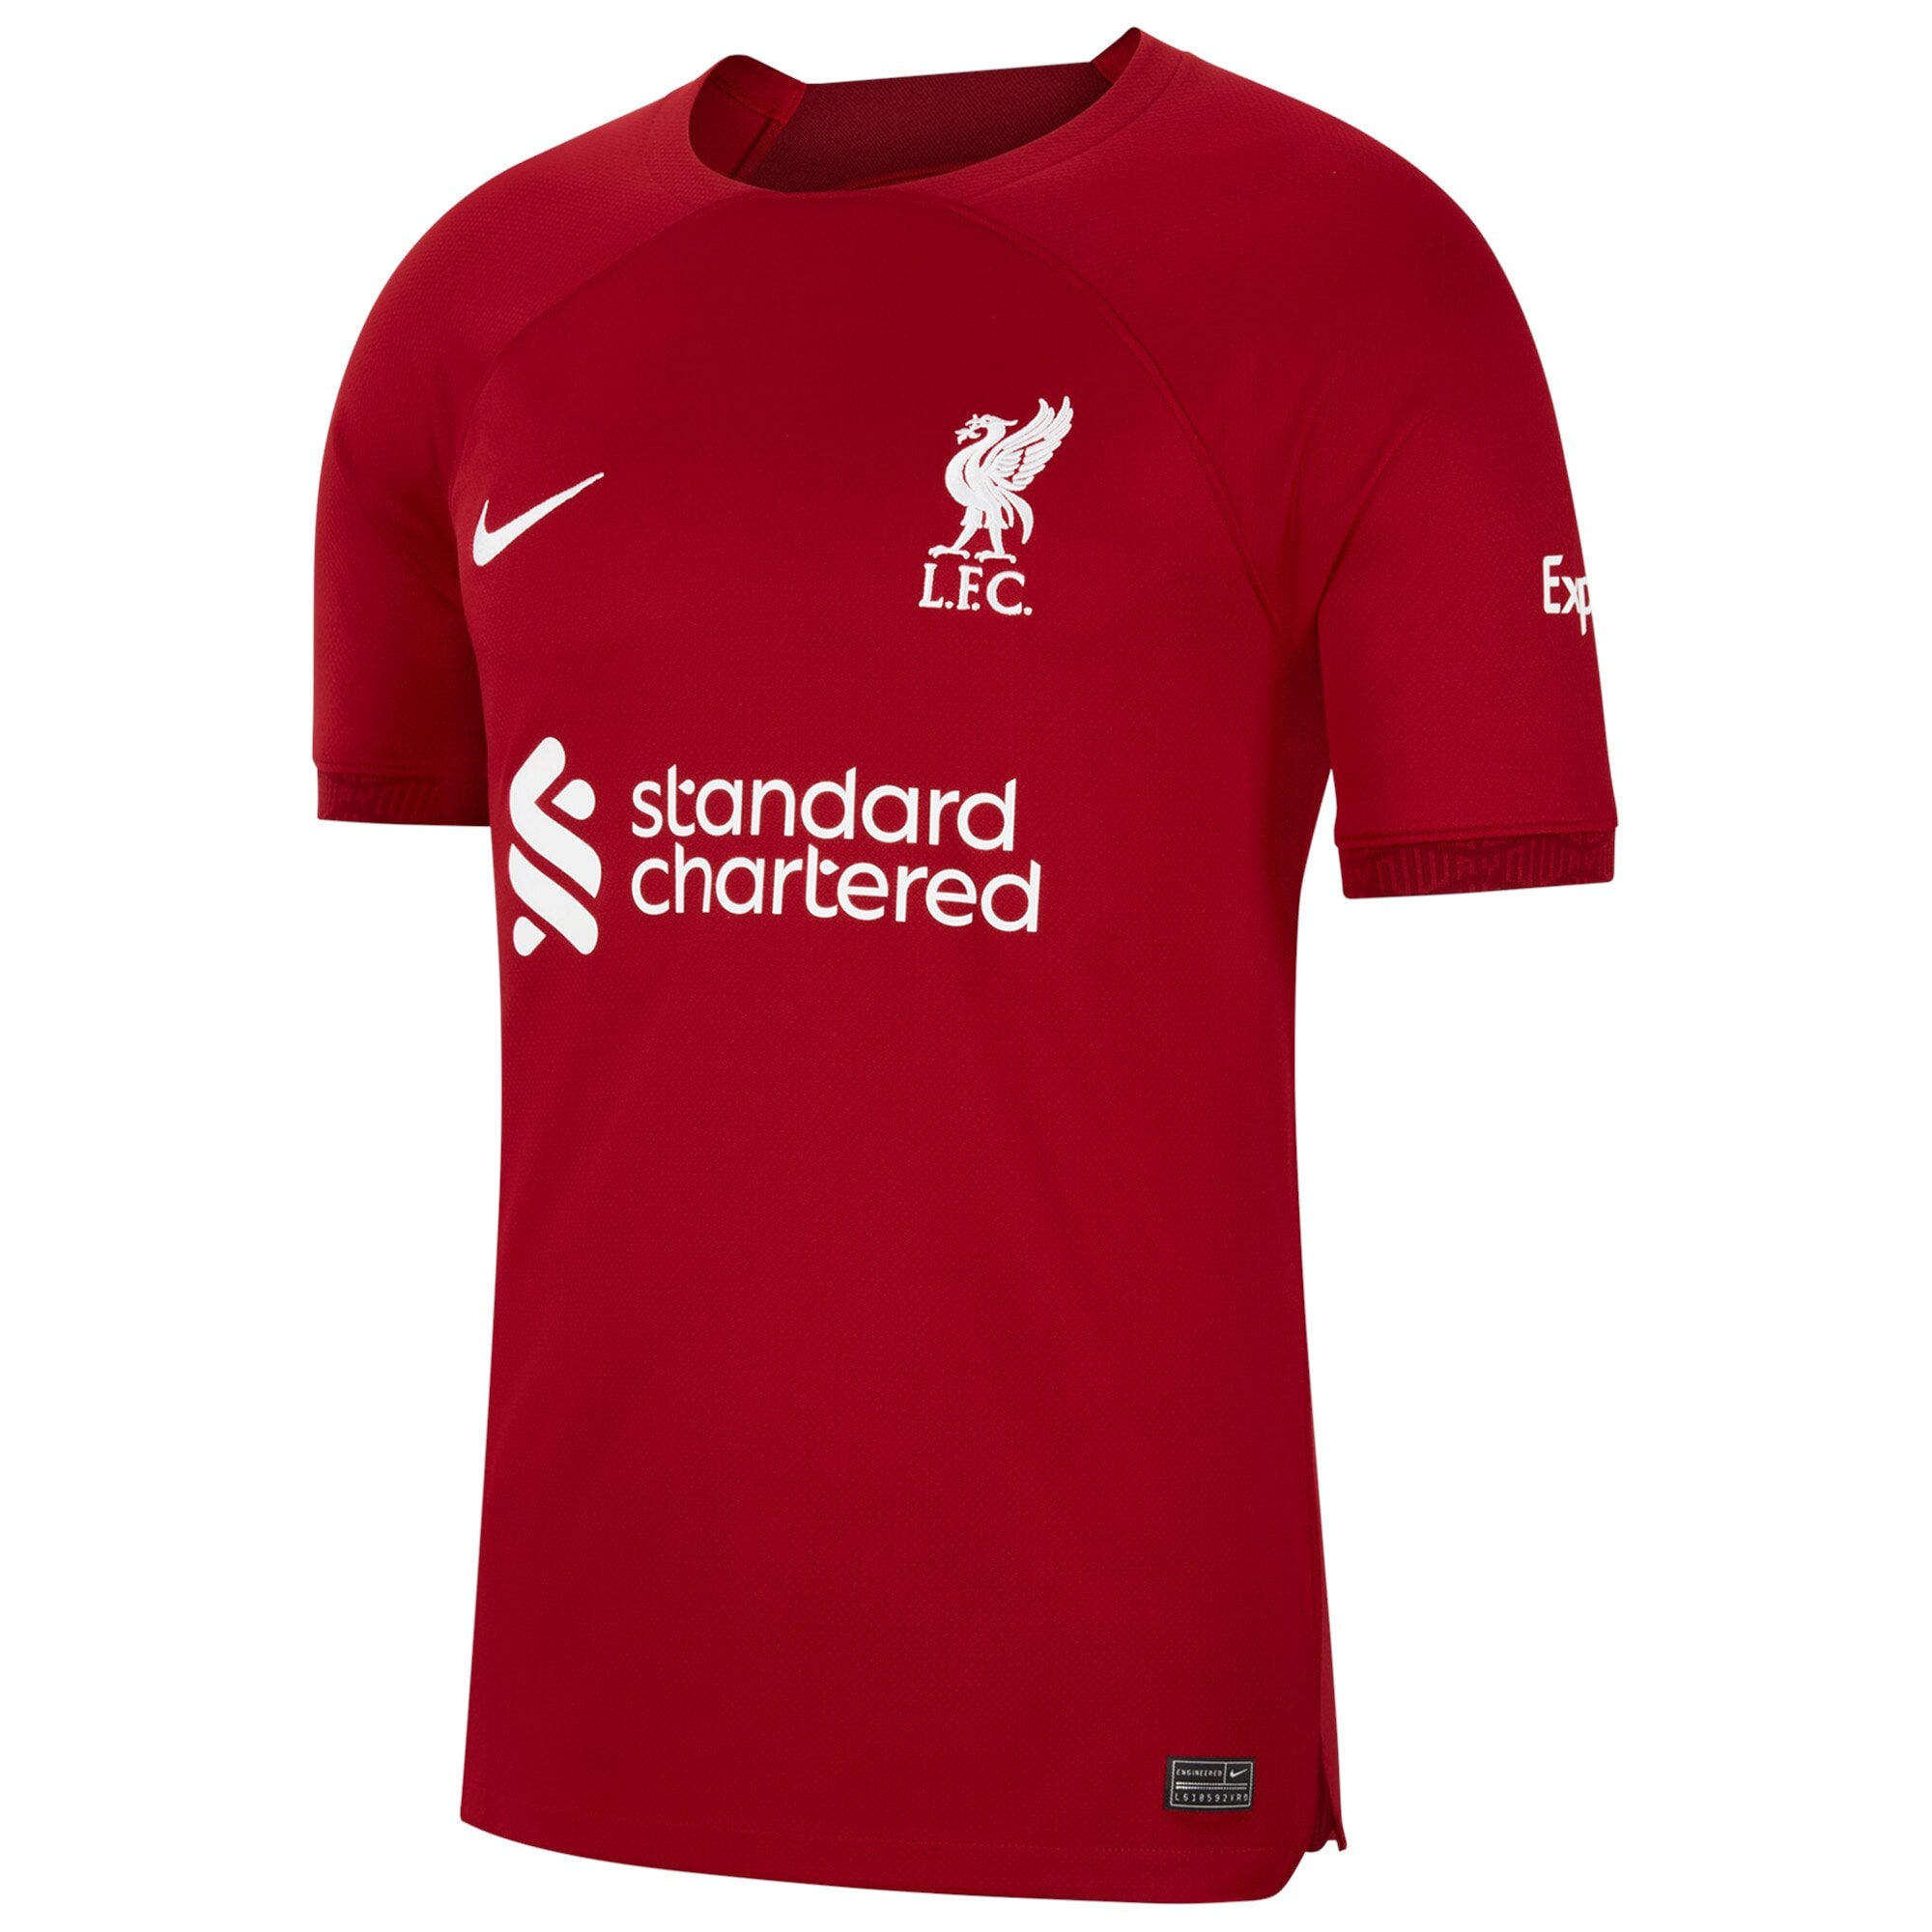 Liverpool Home Stadium Shirt 2022/23 with Thiago 6 printing